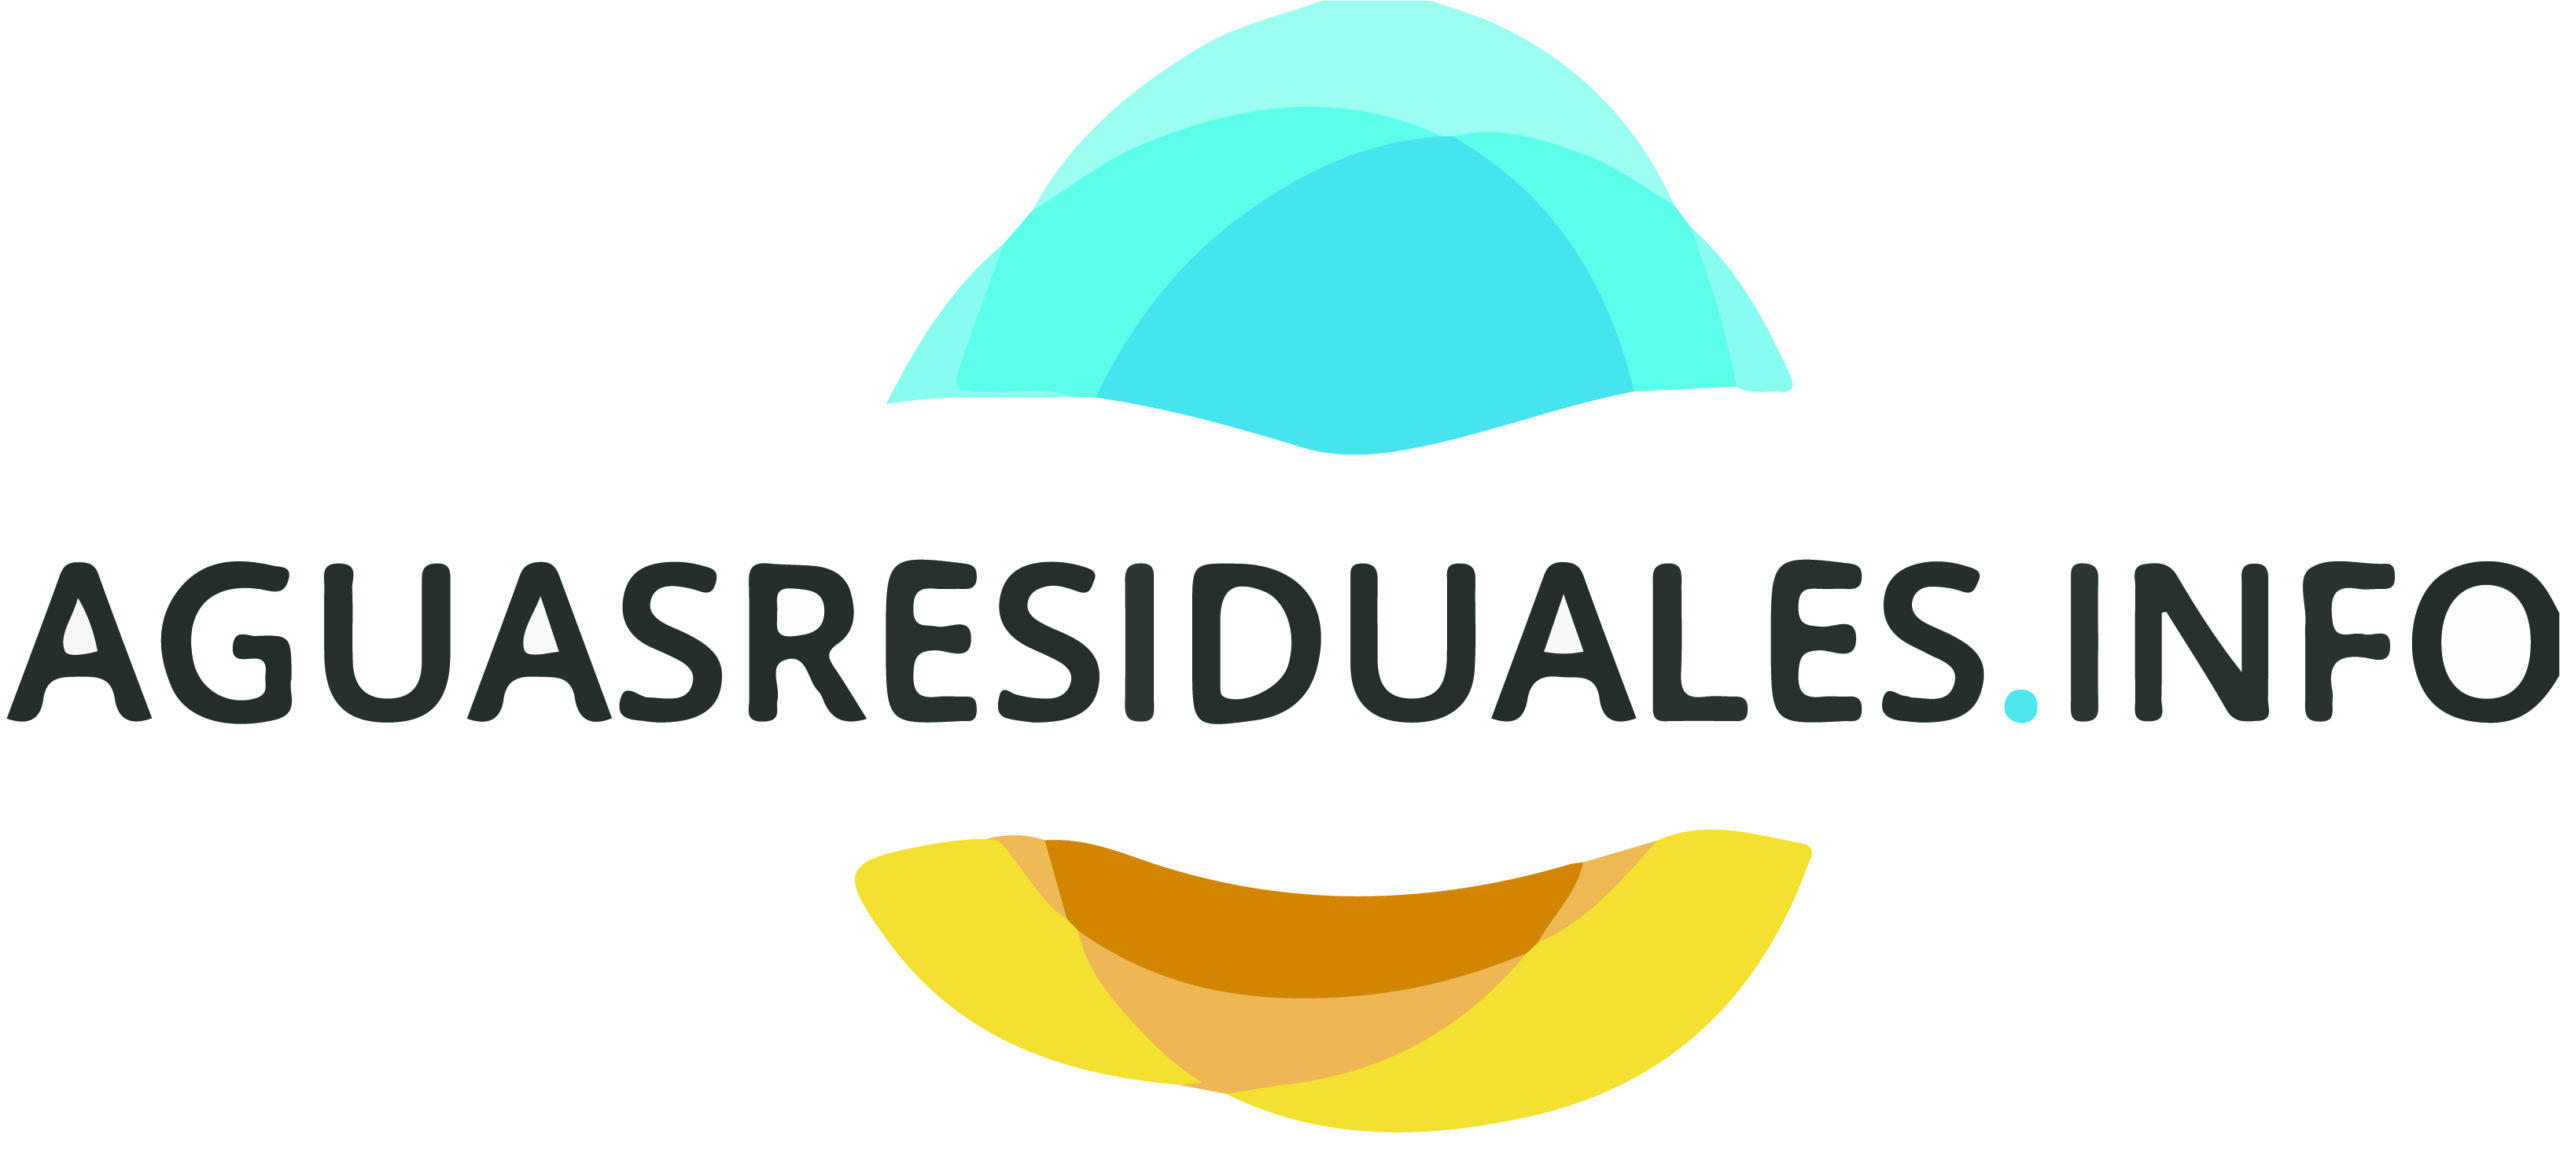 Aguasresiduales.info